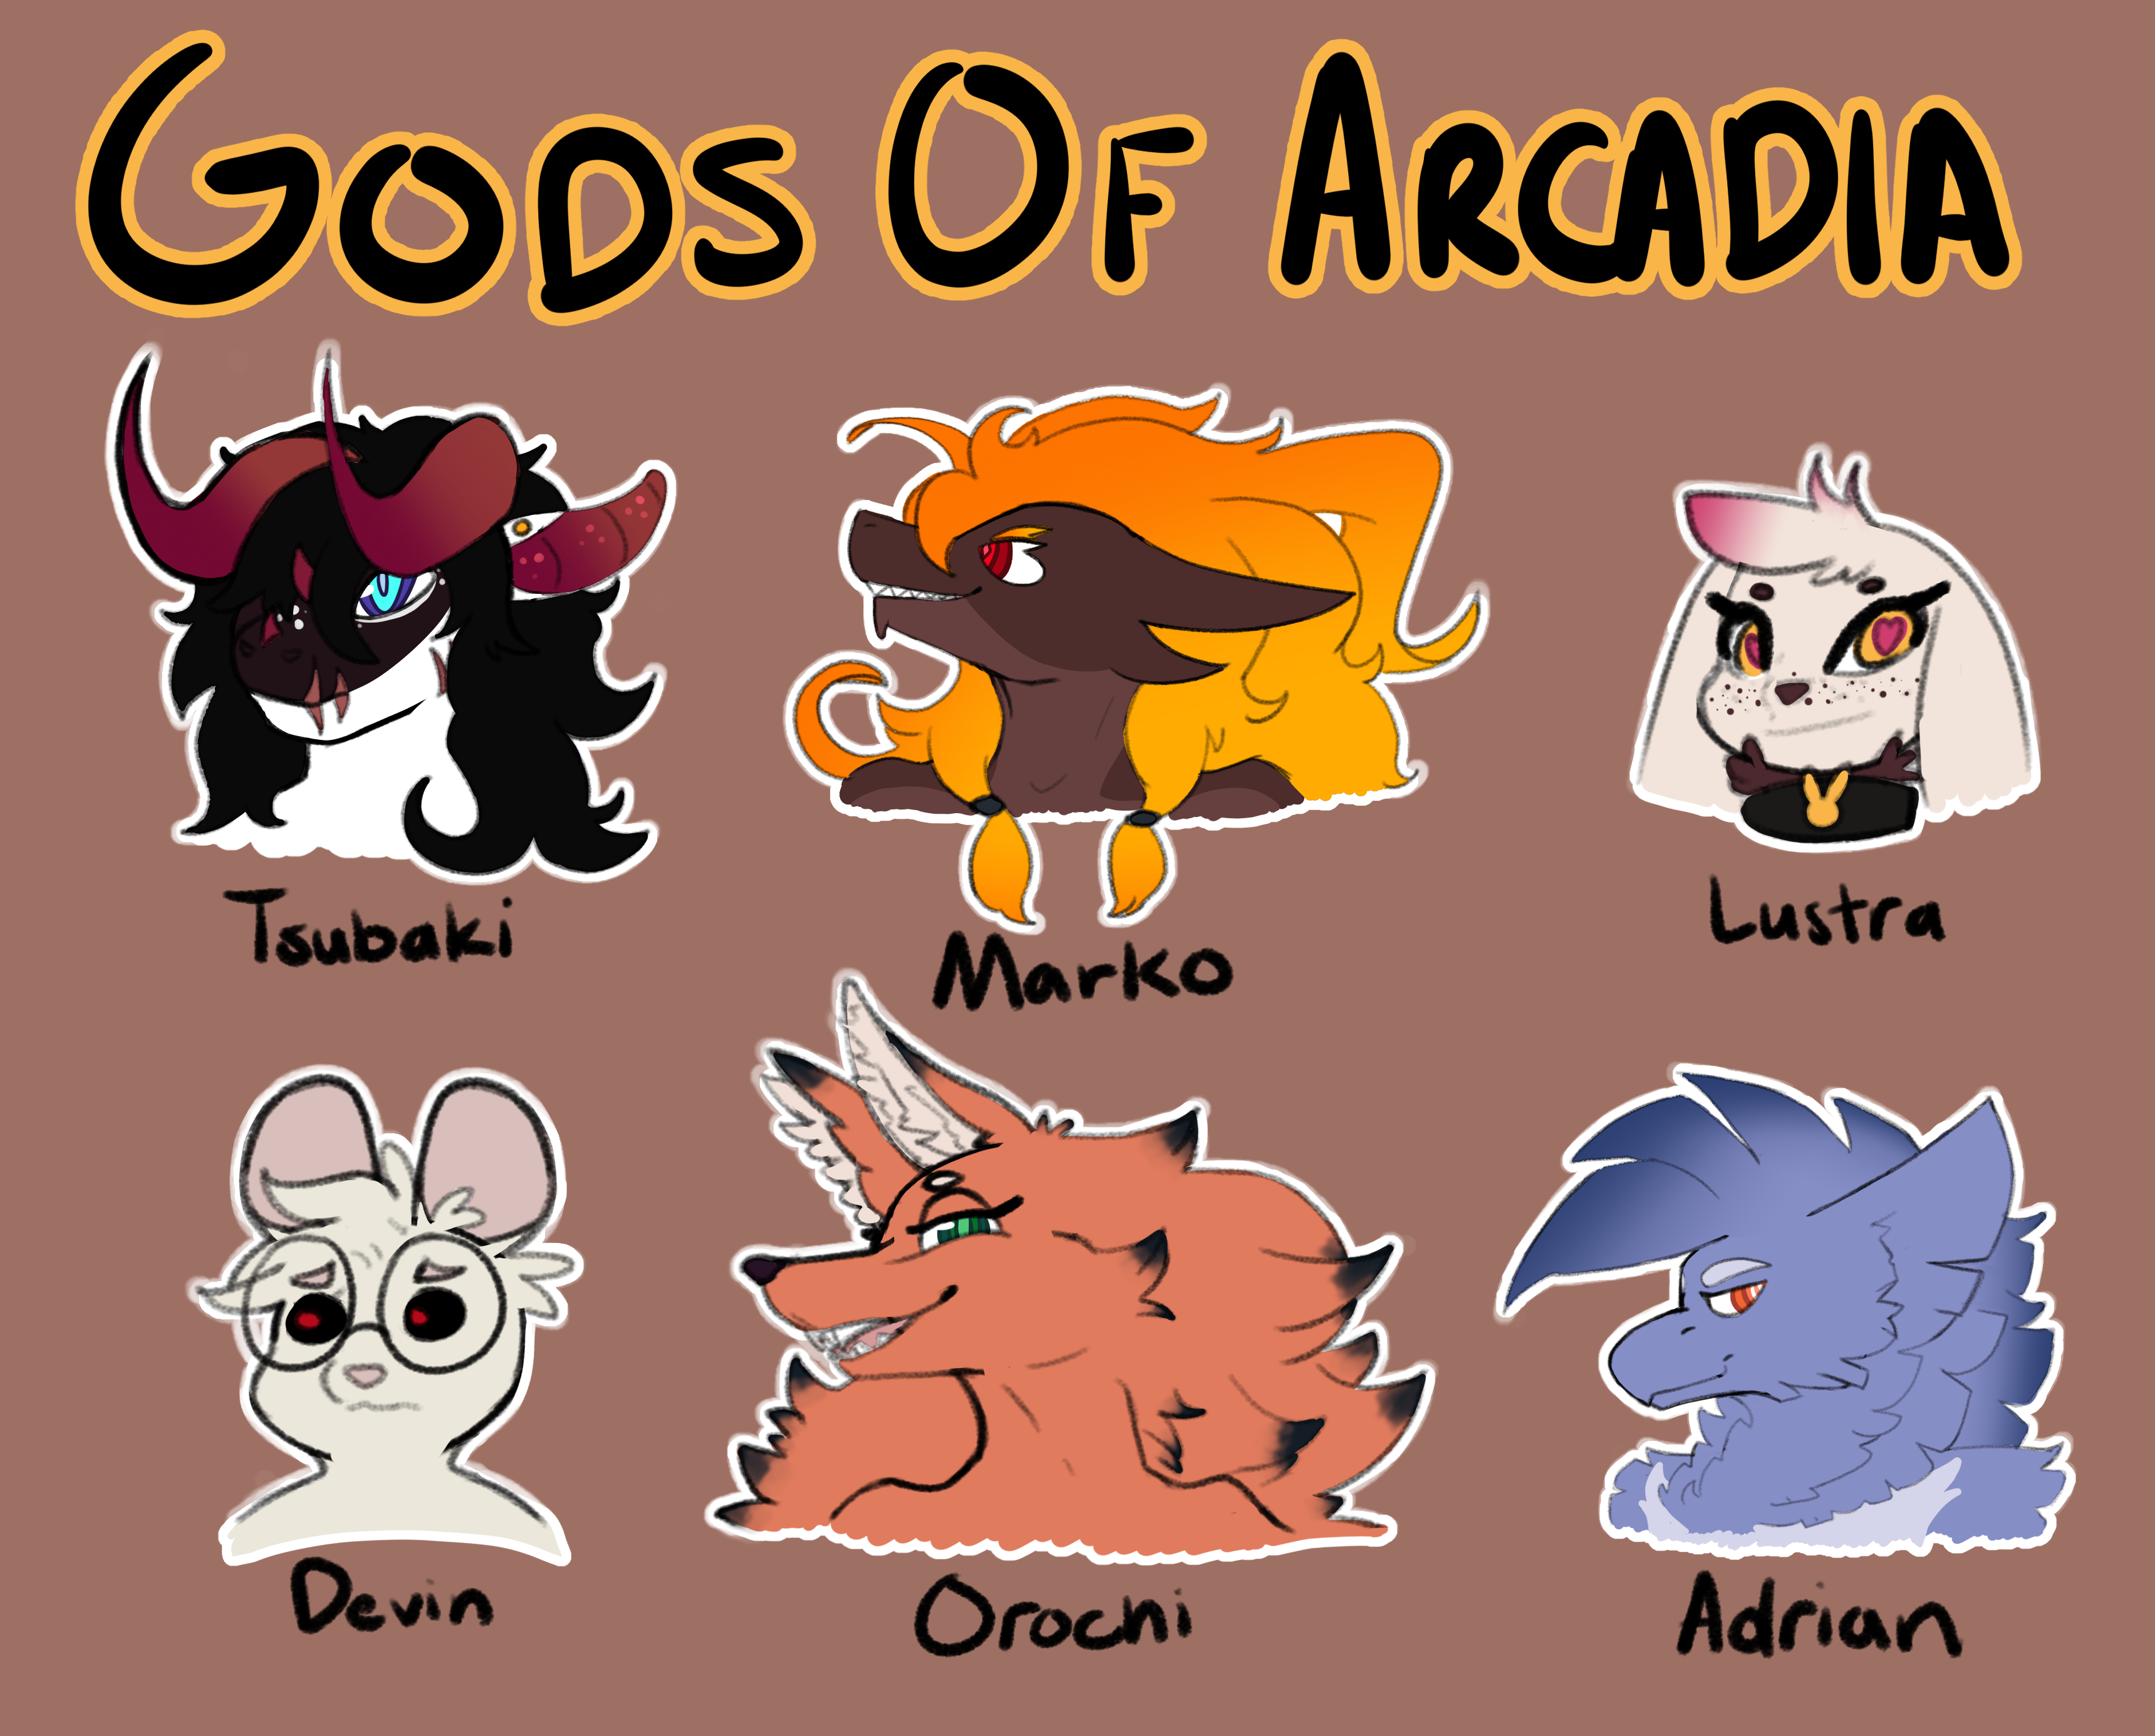 Gods of Arcadia